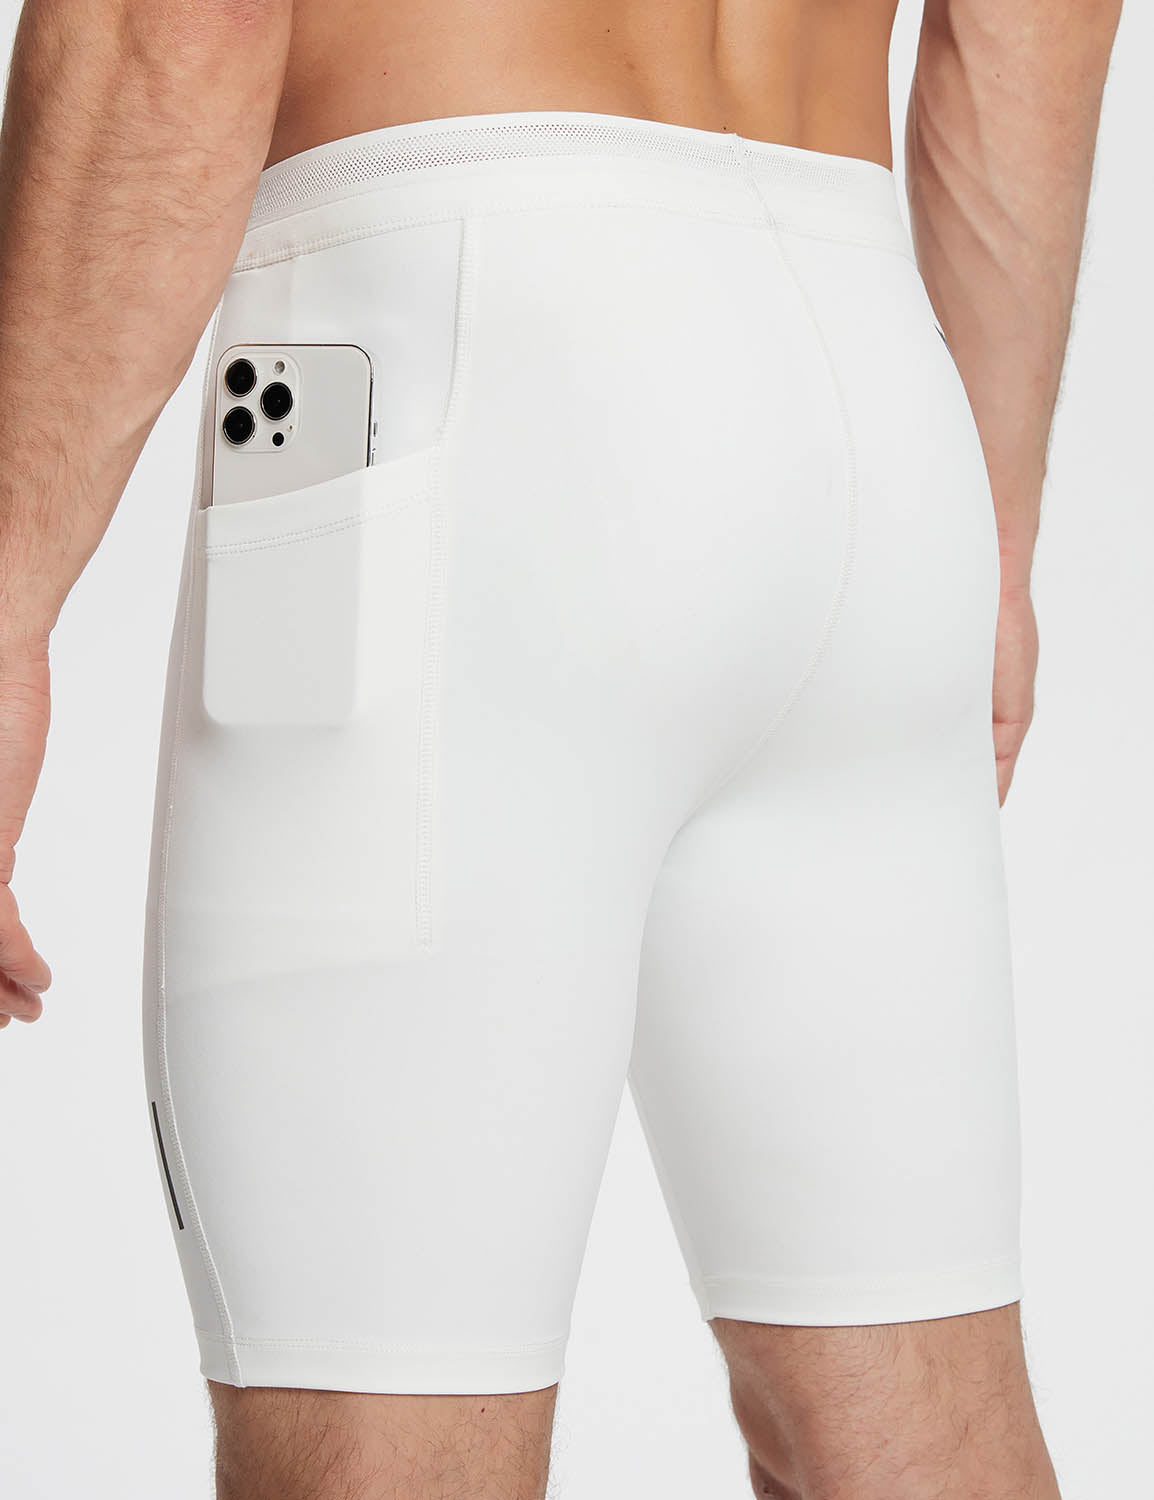 Baleaf Men's Lycra 2-in-1 Compresion Shorts (Website Exclusive) dbd060 Lucent White Details